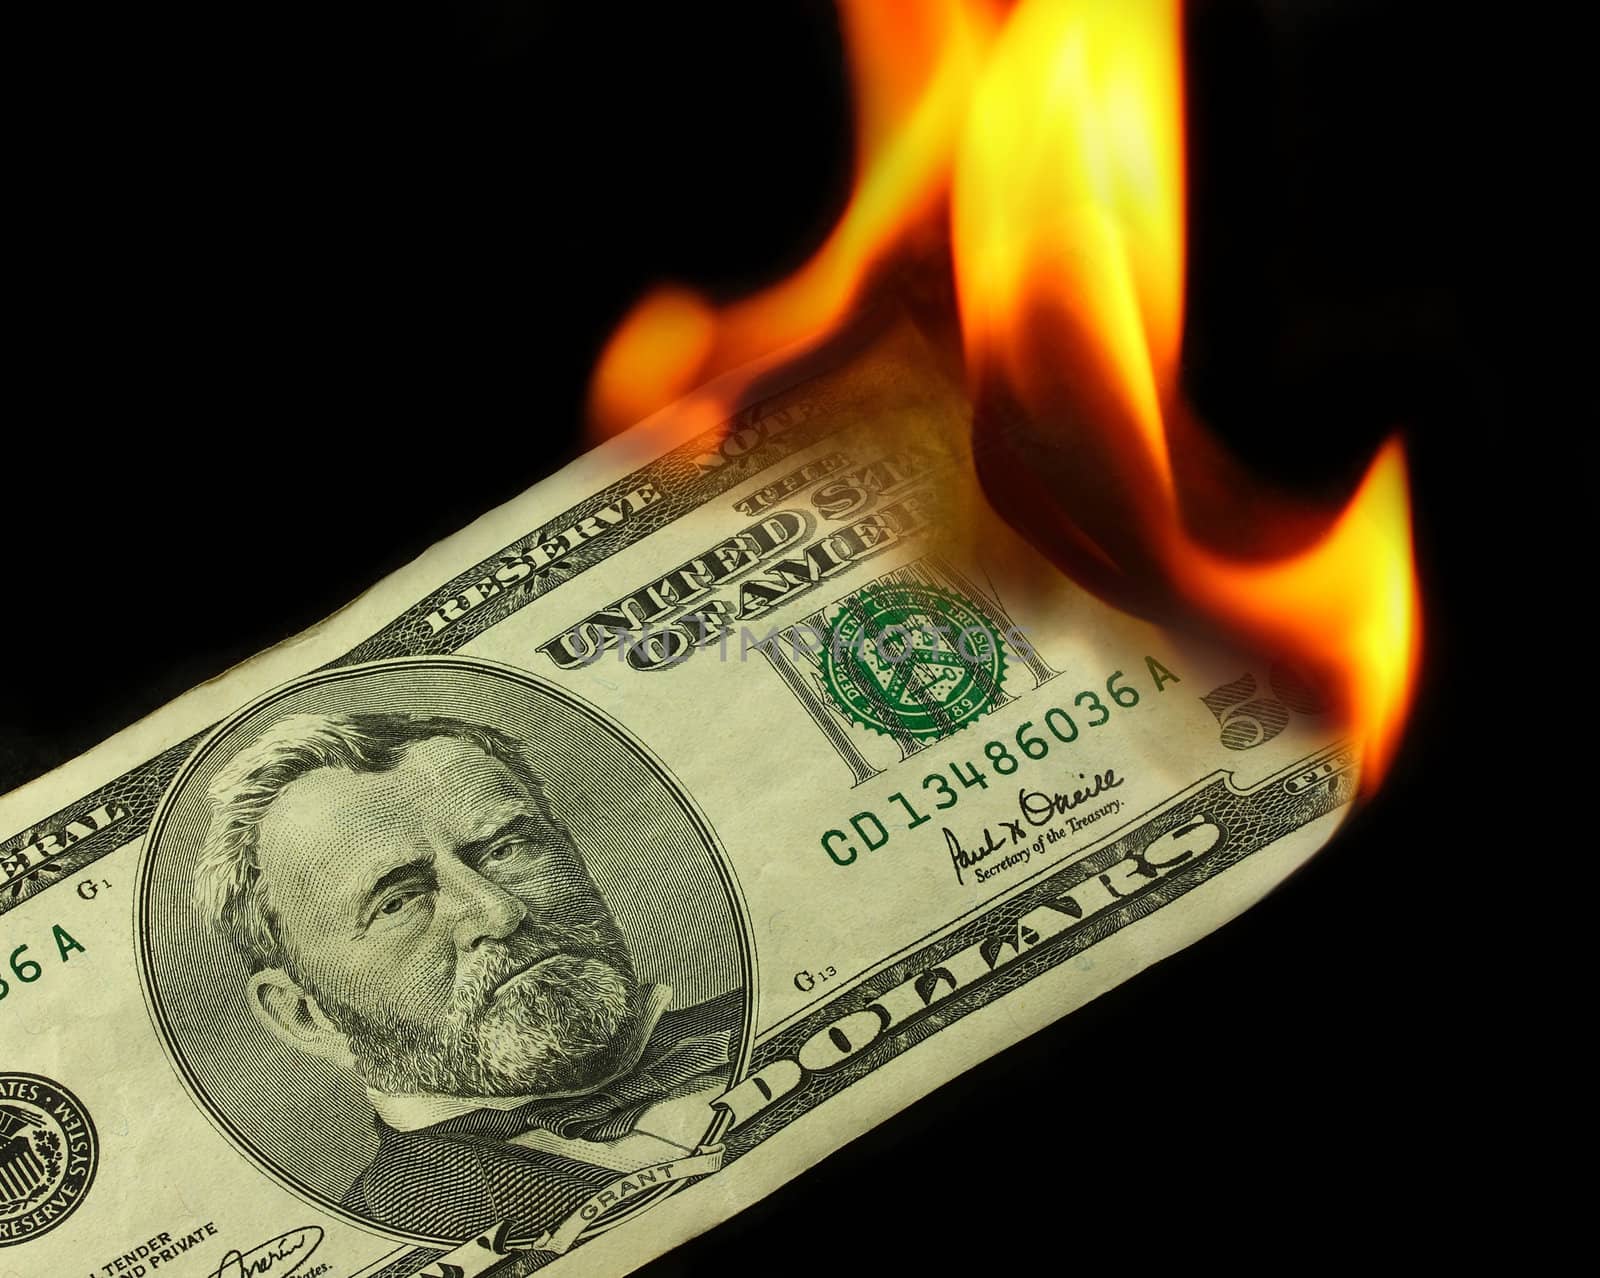 Money to Burn by Geoarts